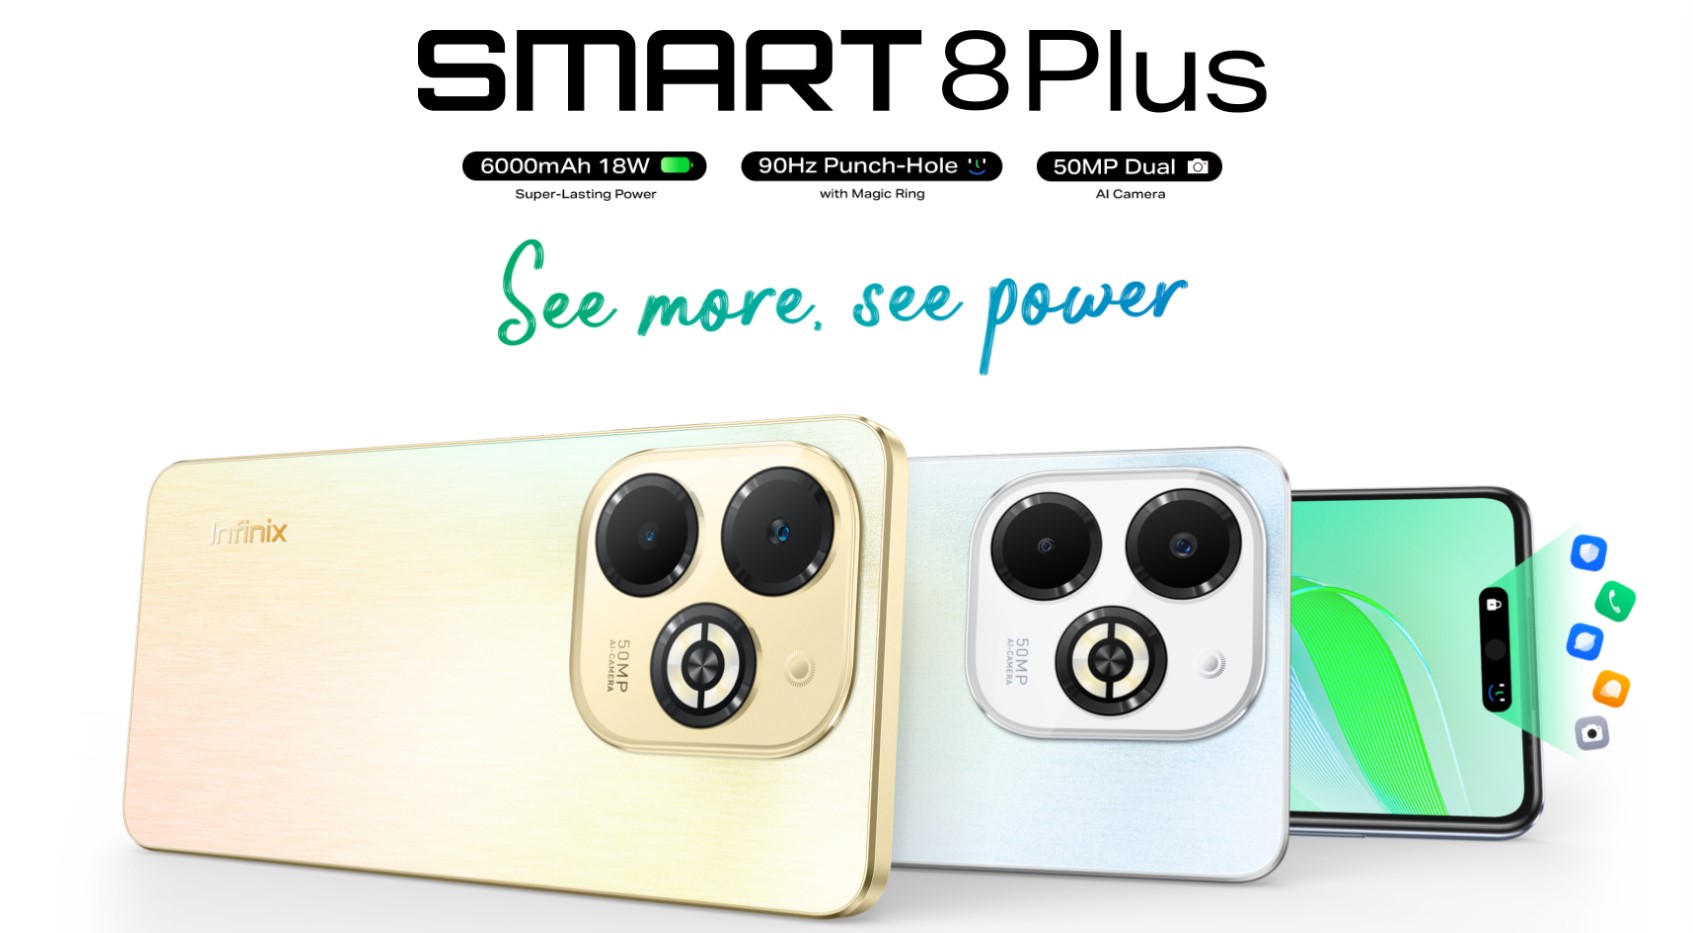 Infinix Smart 8 Plus